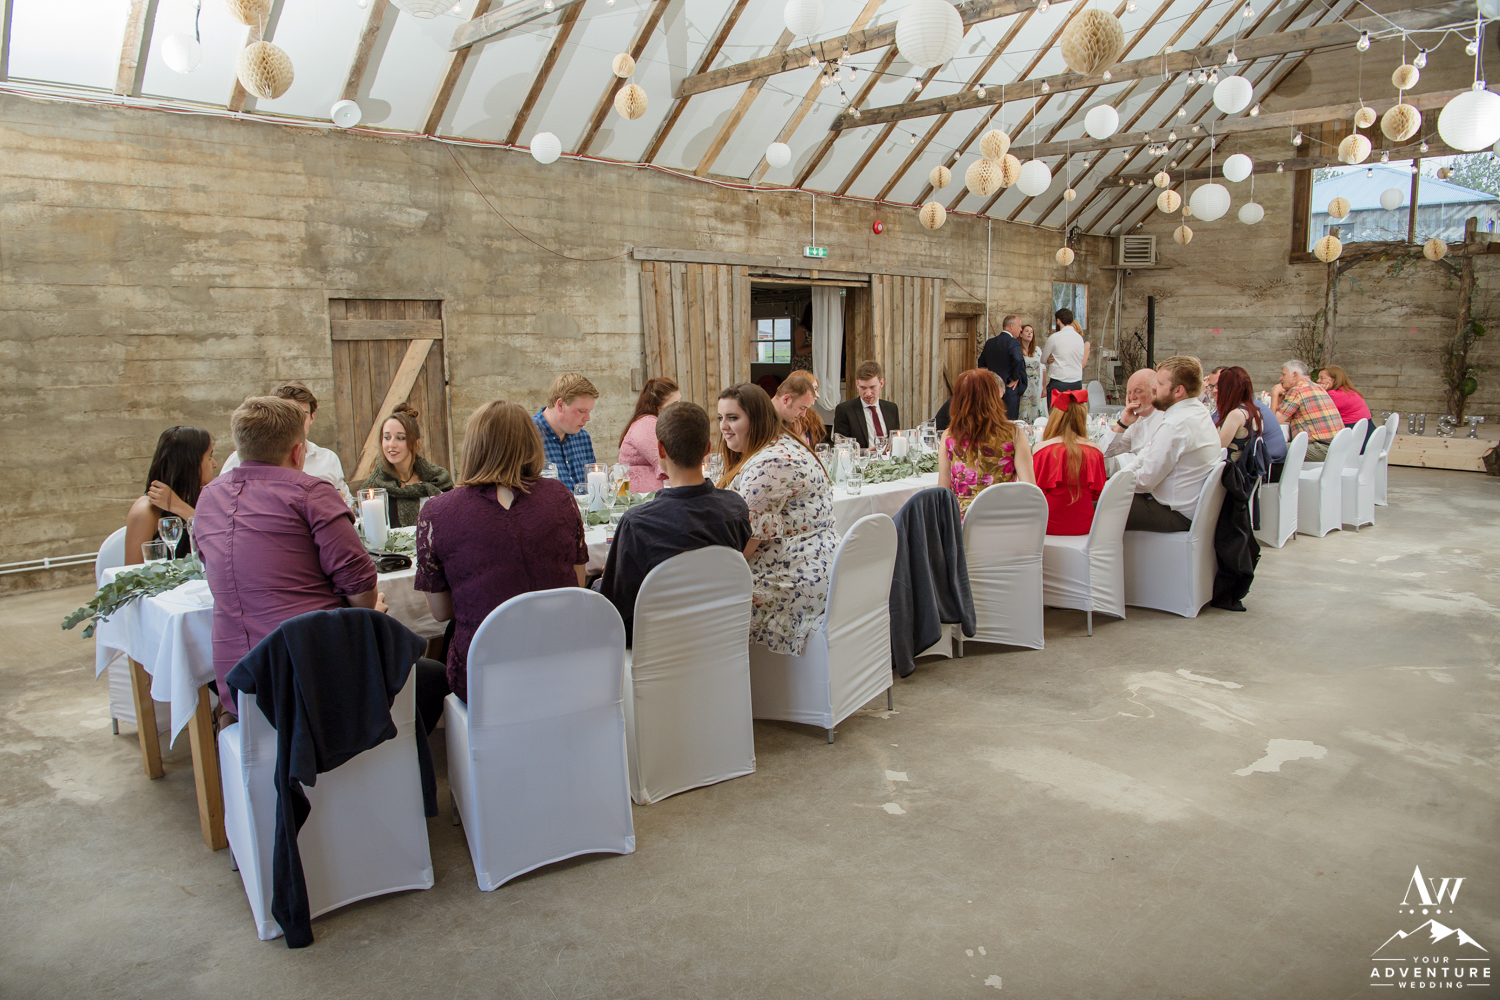 Hotel Borealis Wedding Reception inside of rustic barn